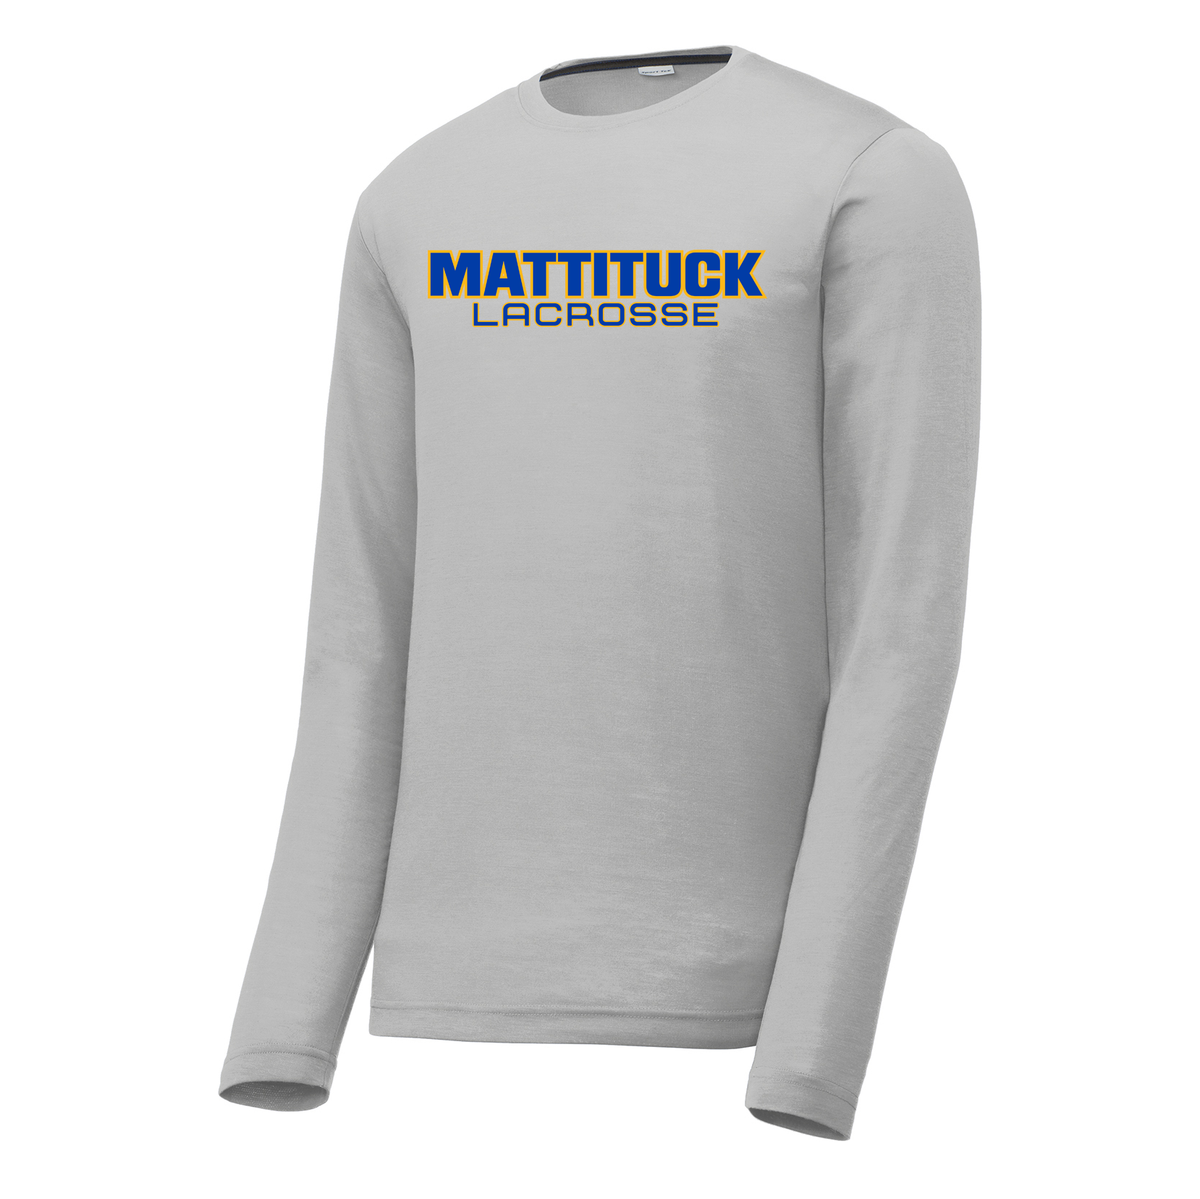 Mattituck Lacrosse Long Sleeve CottonTouch Performance Shirt